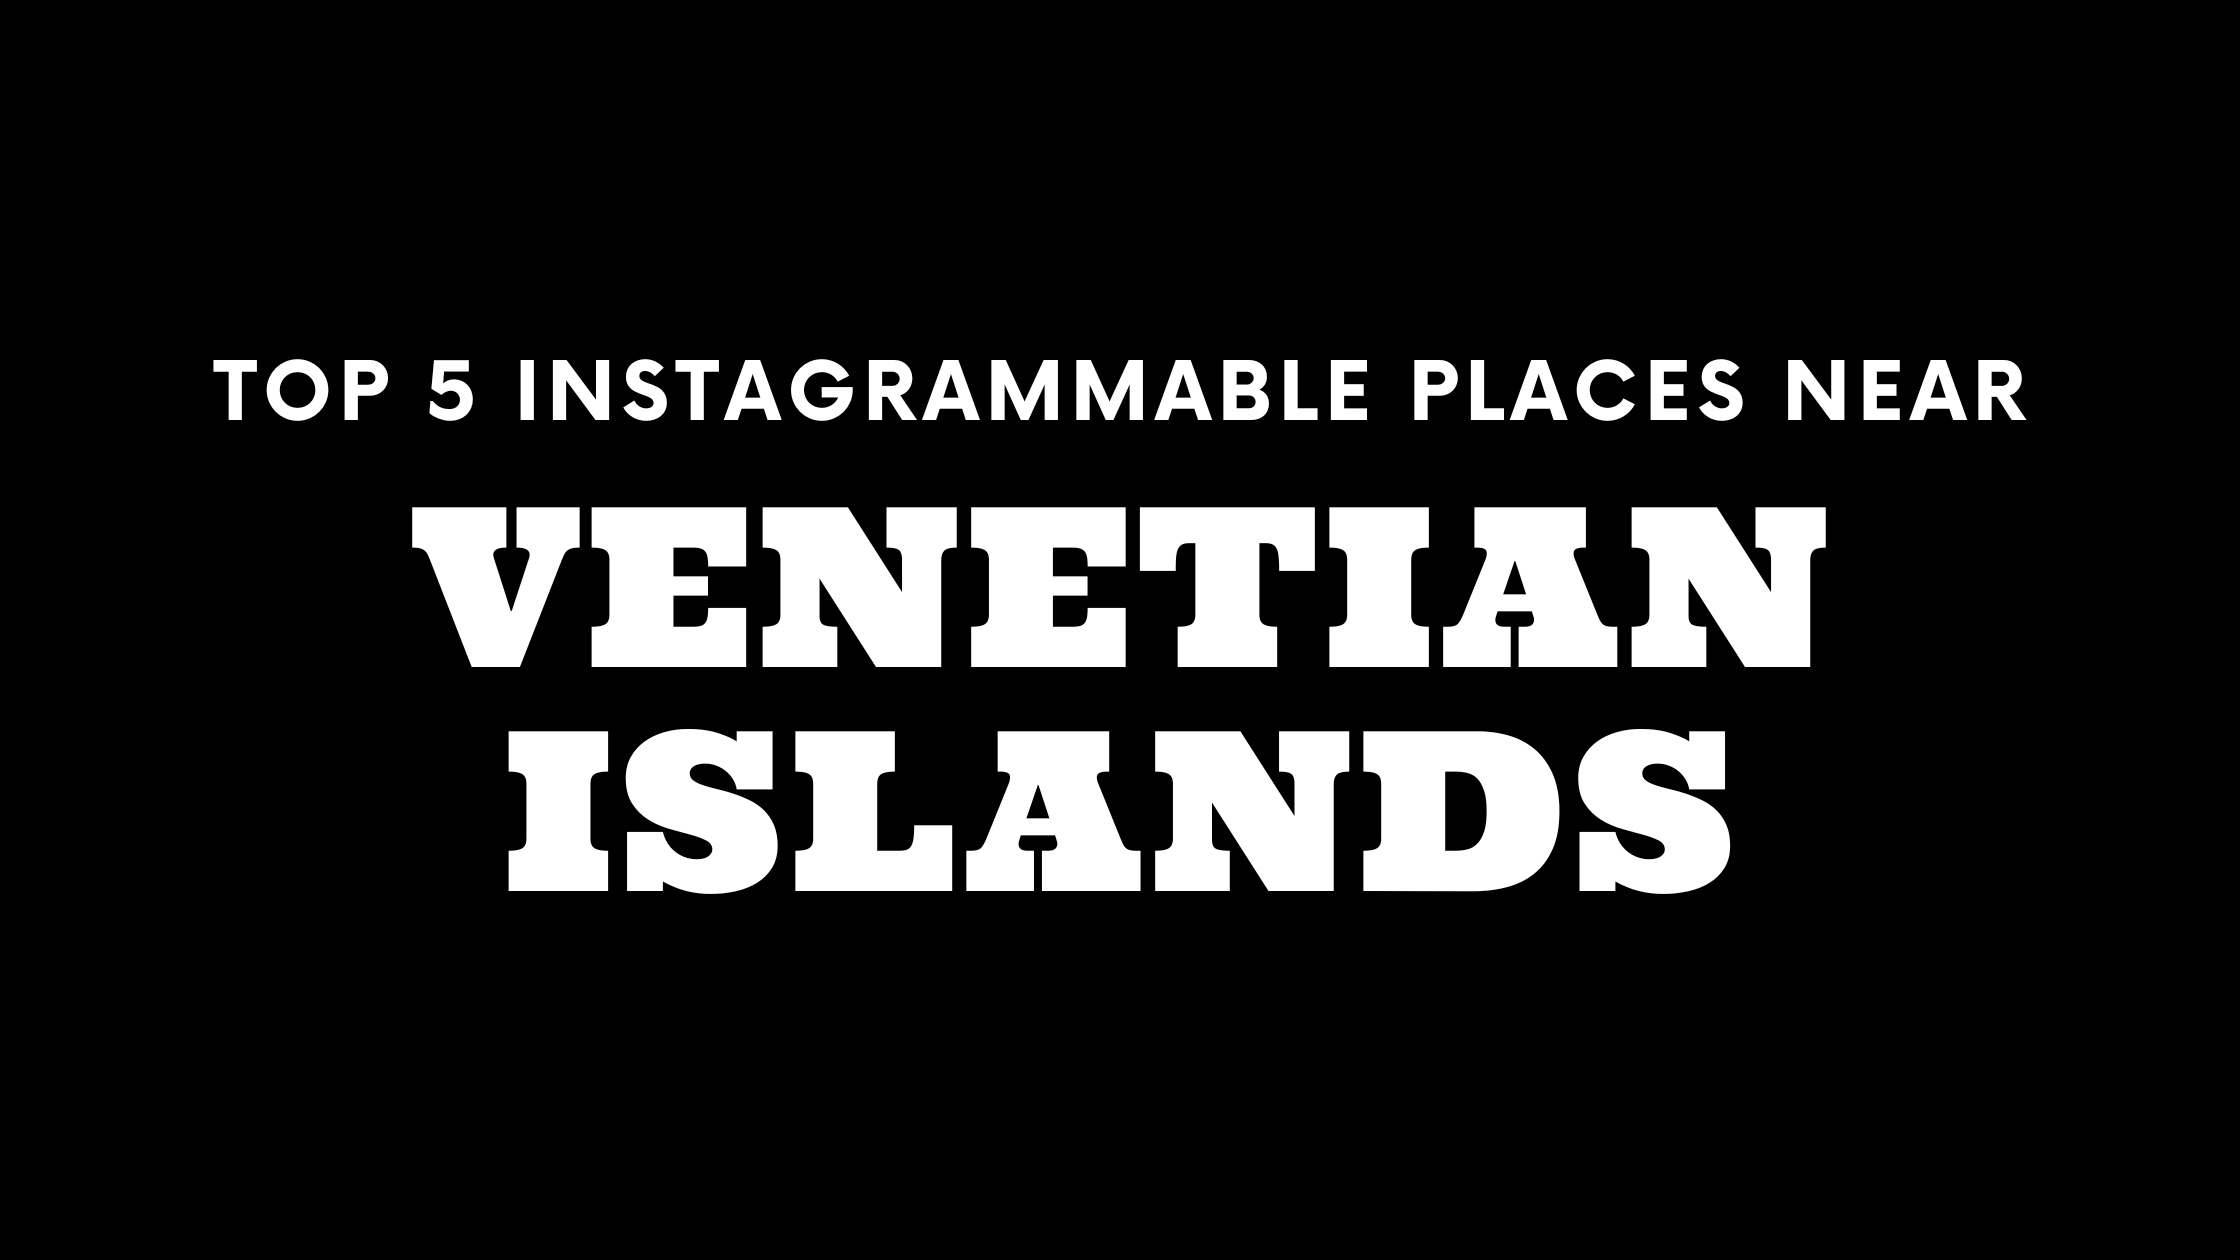 Top 5 Instagrammable Places Near Venetian Islands